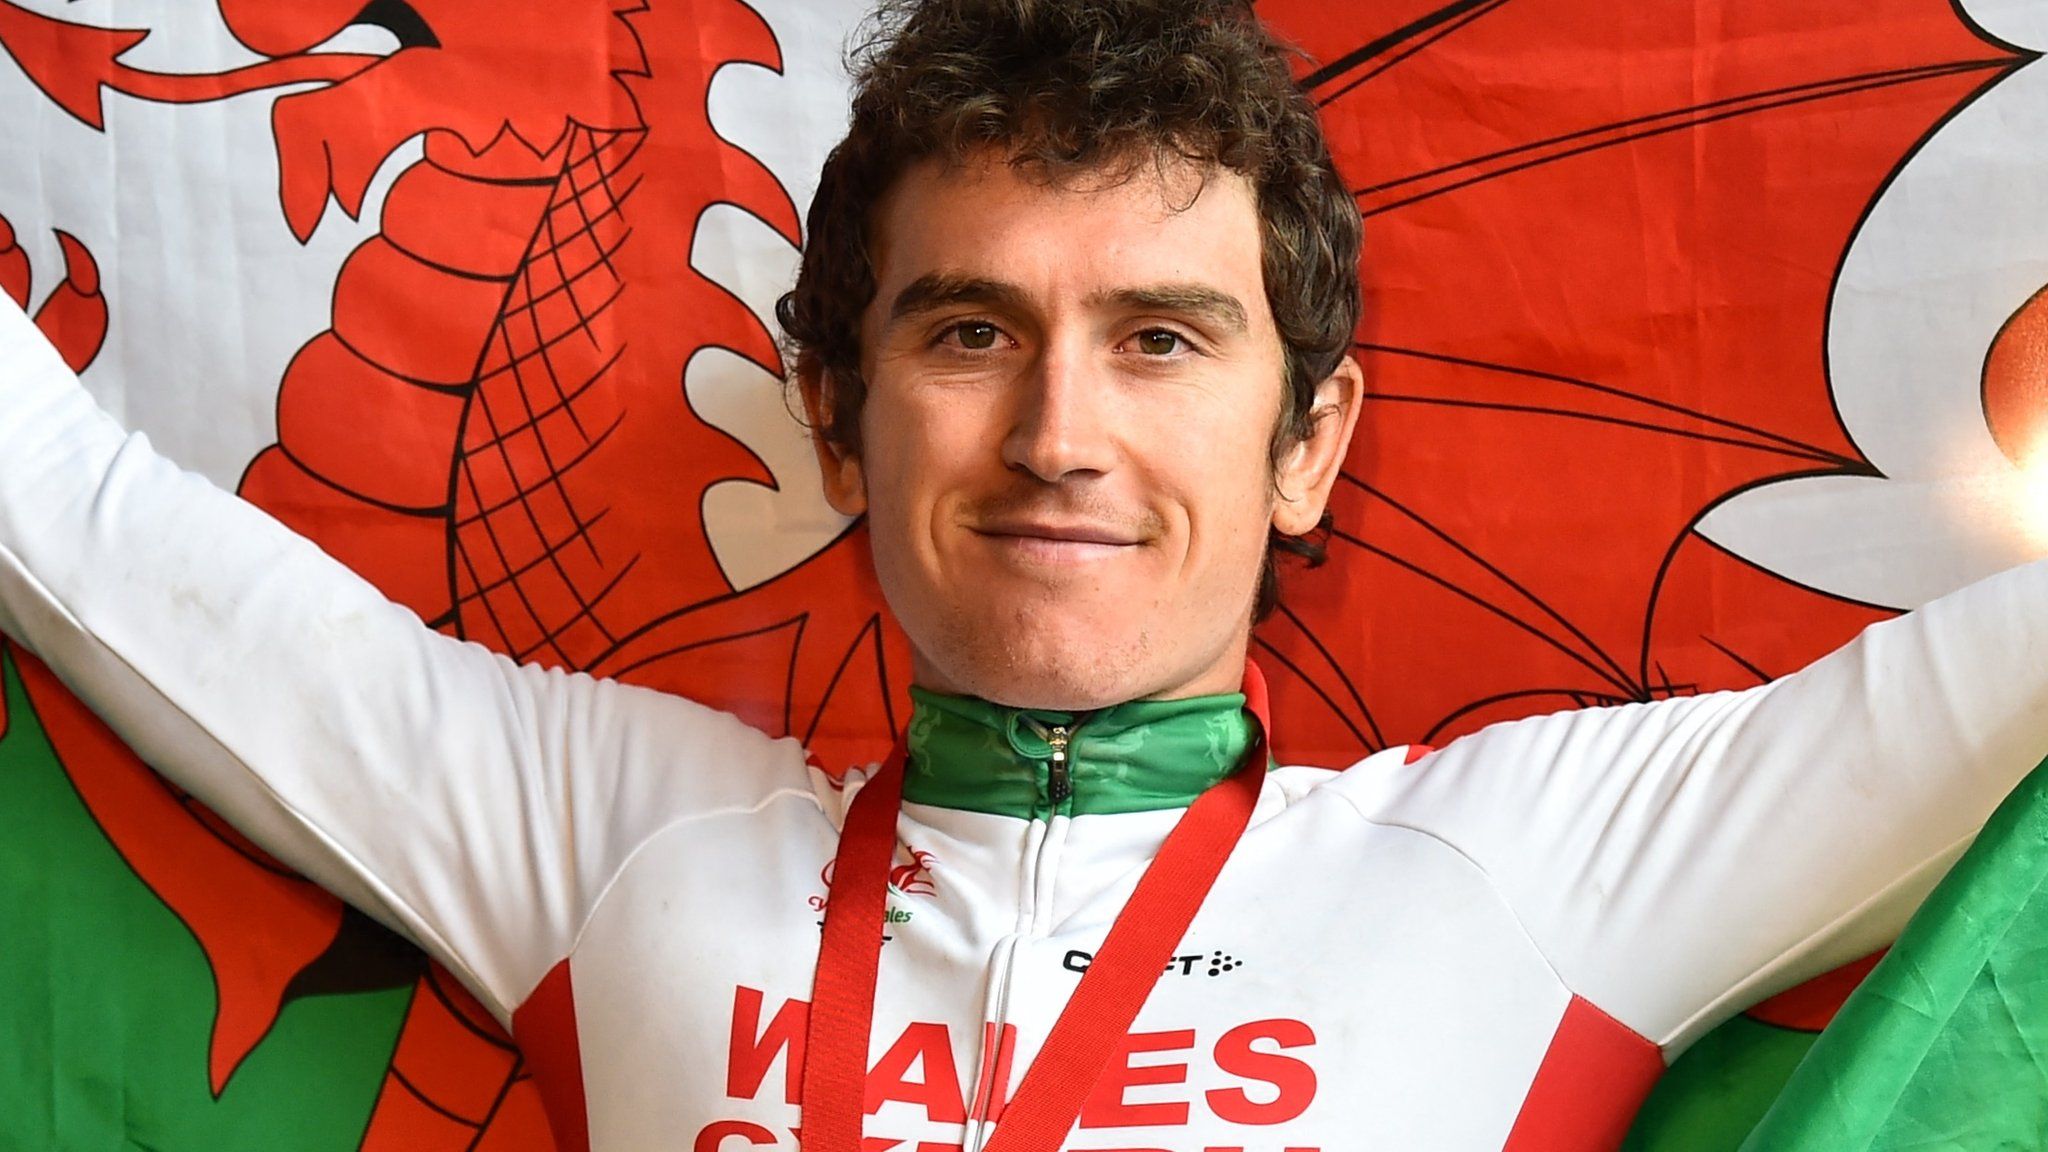 Welsh cyclist Geraint Thomas